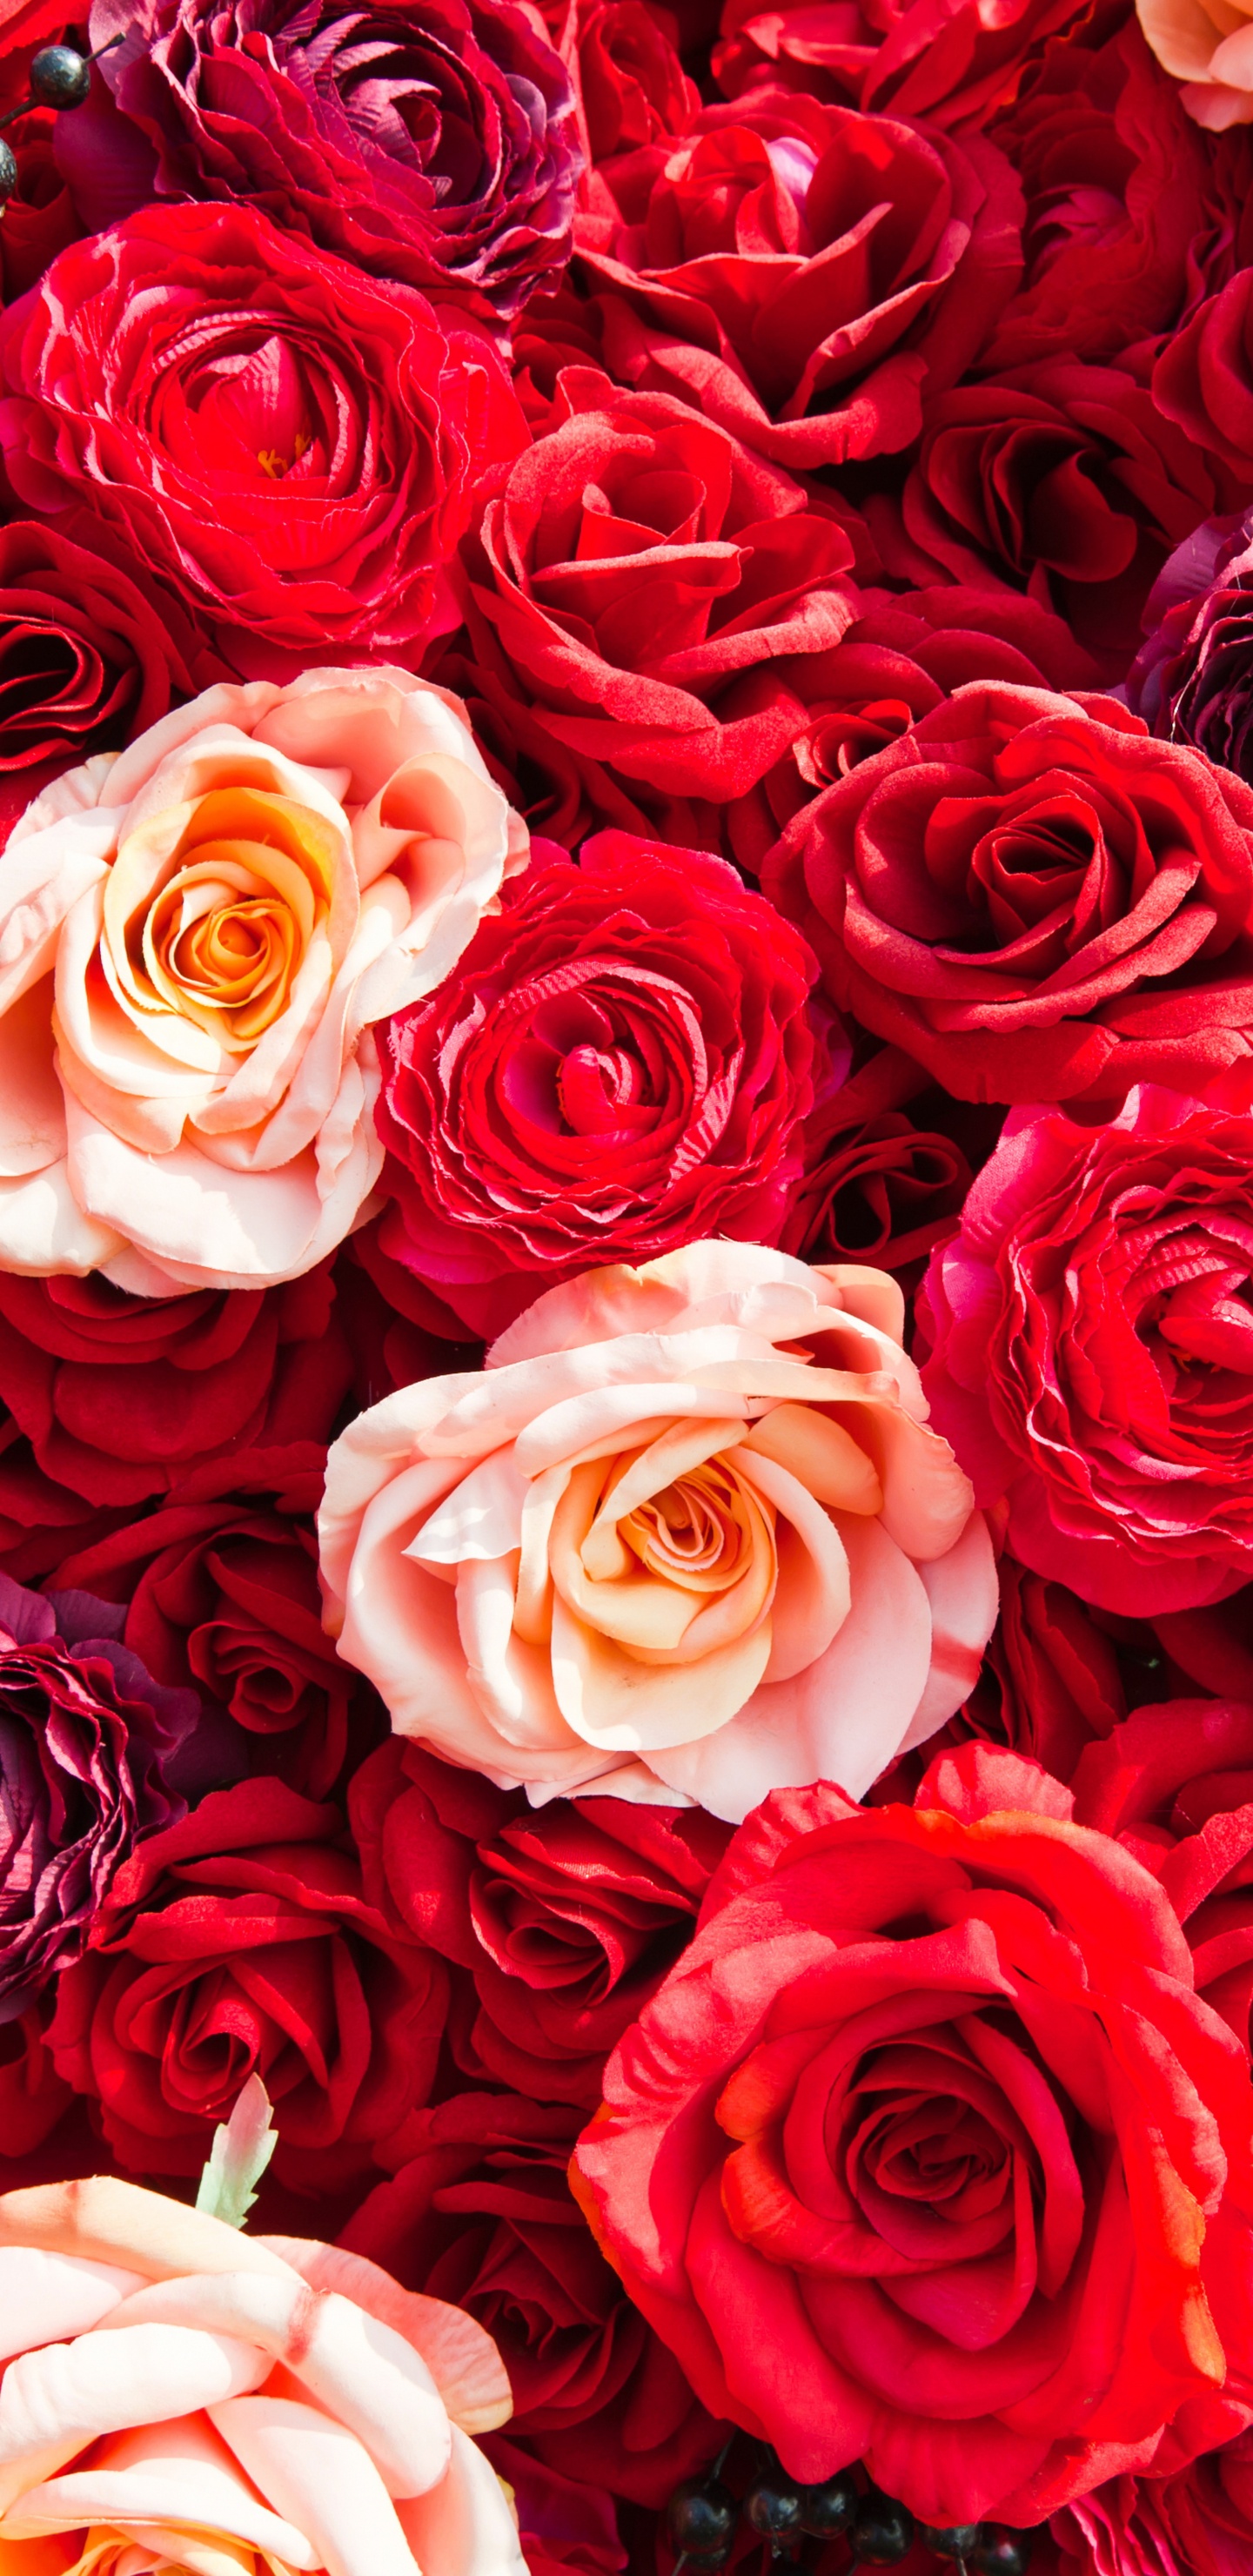 Bouquet de Roses Rouges et Blanches. Wallpaper in 1440x2960 Resolution